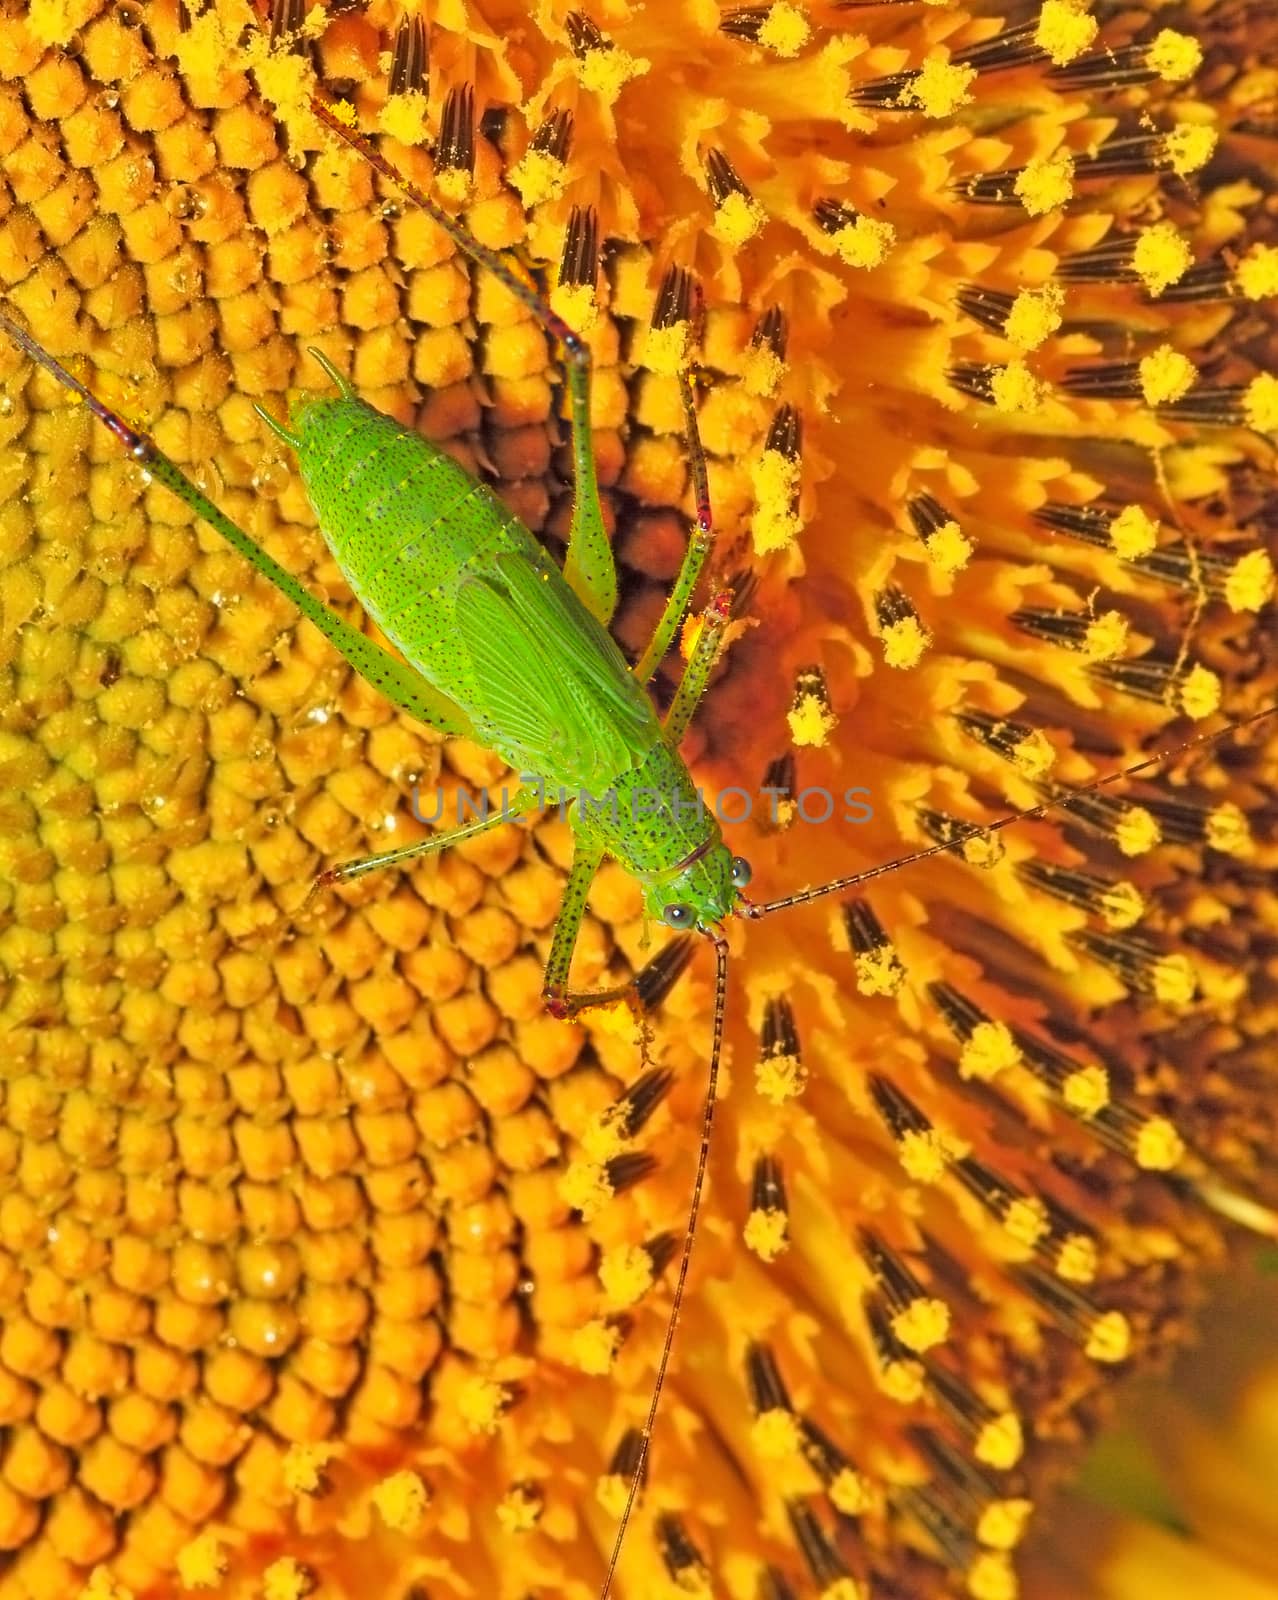 Green locust on the sunflower